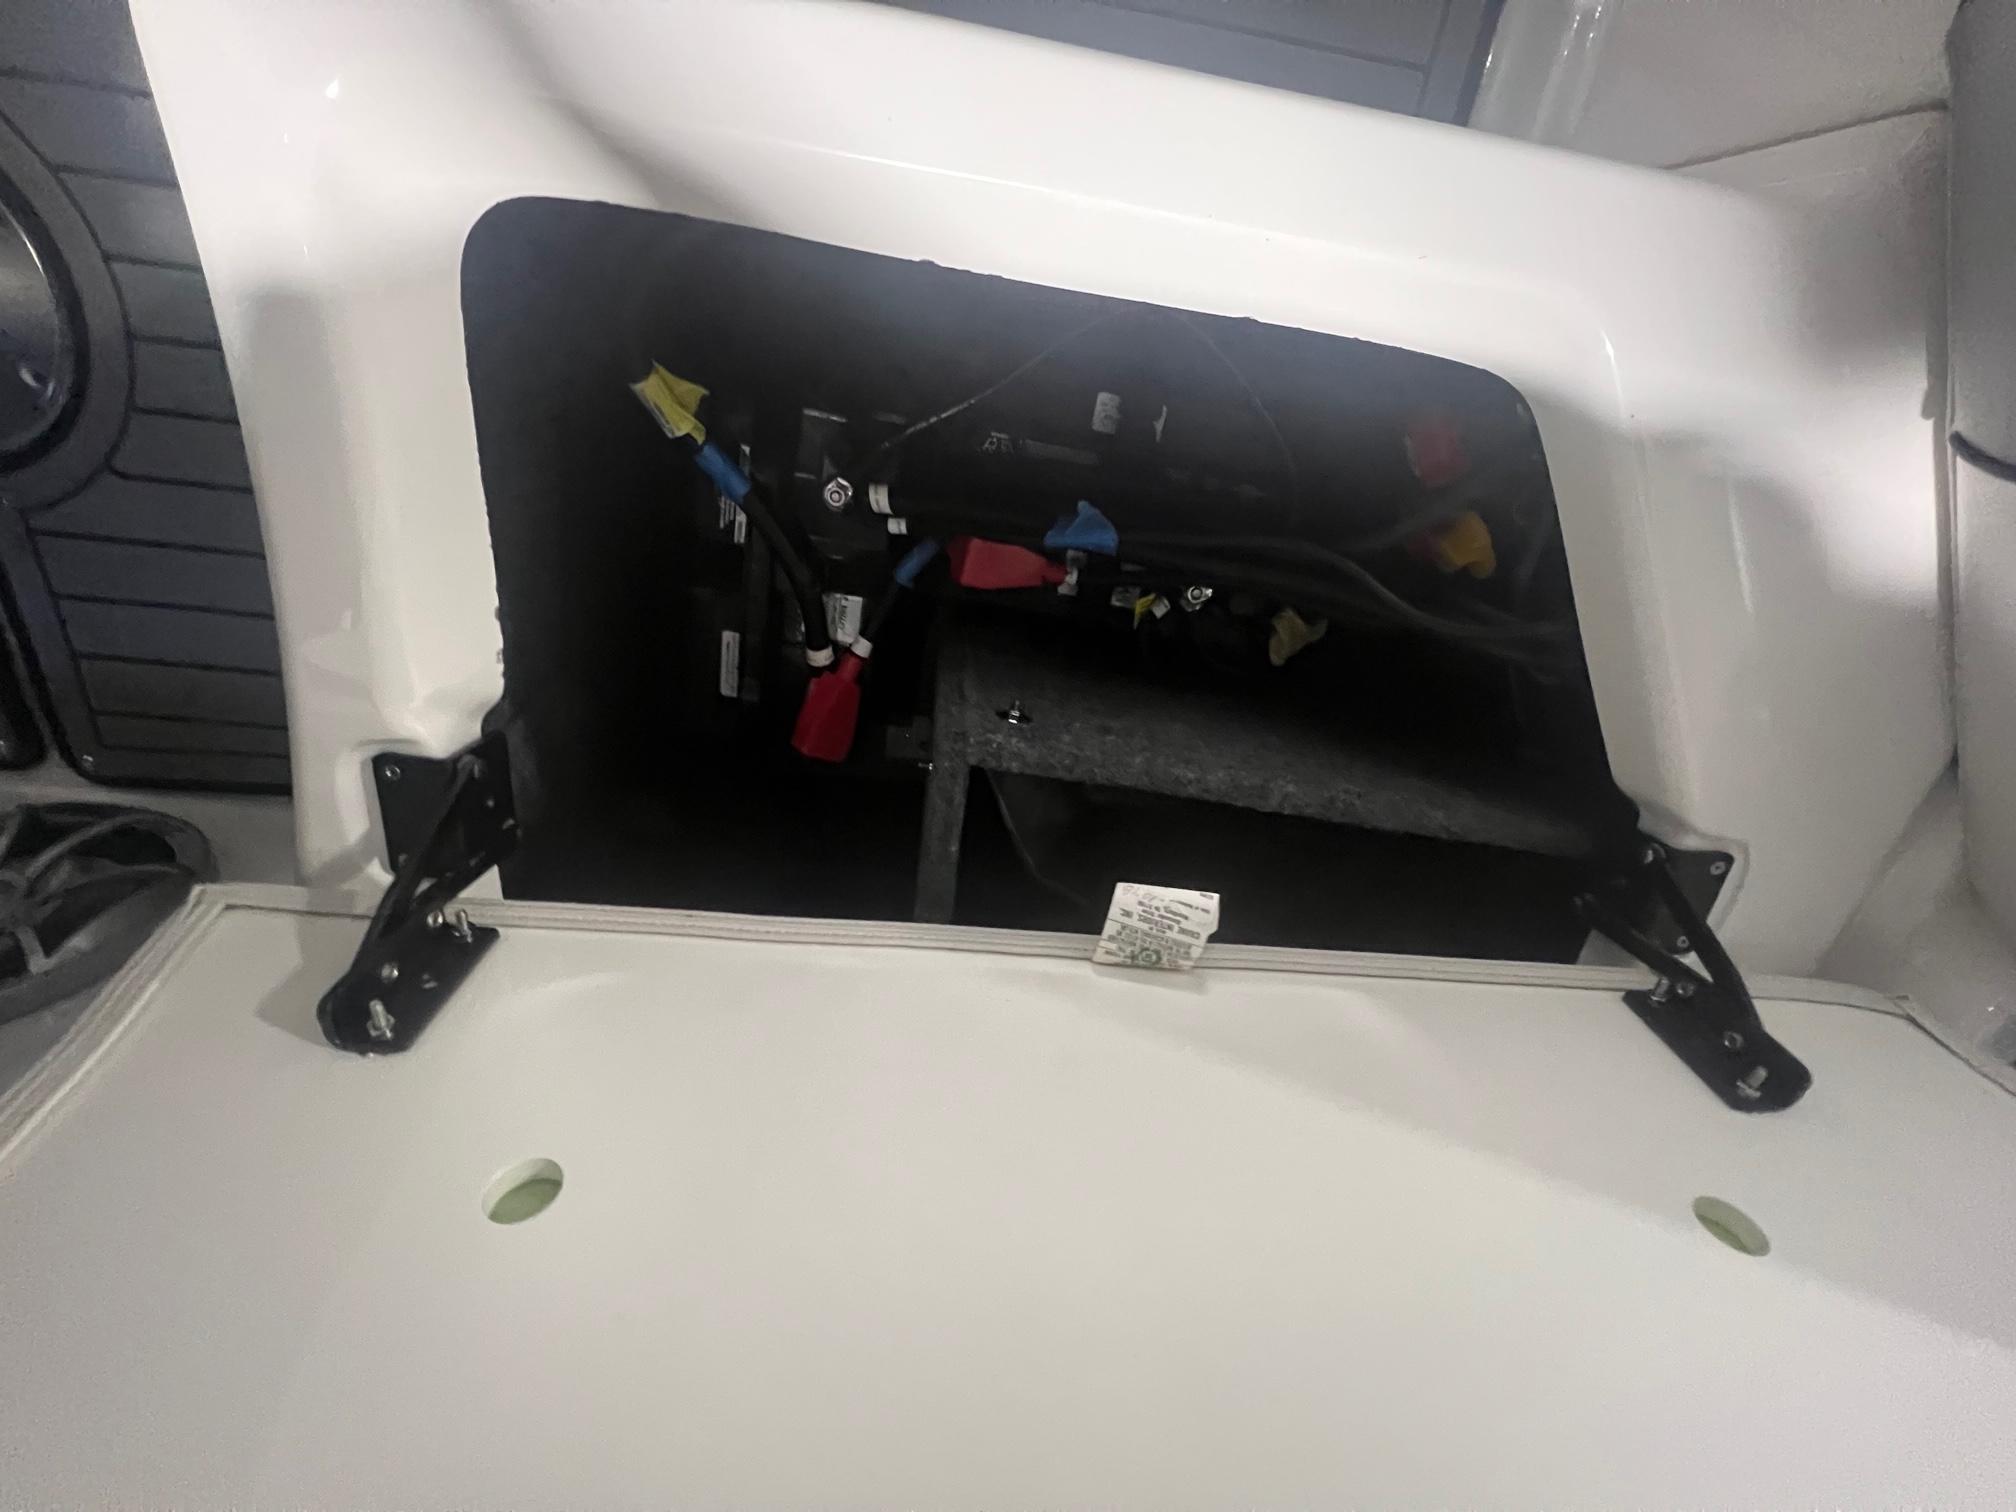 2018 Yamaha Boats 242X E-Series